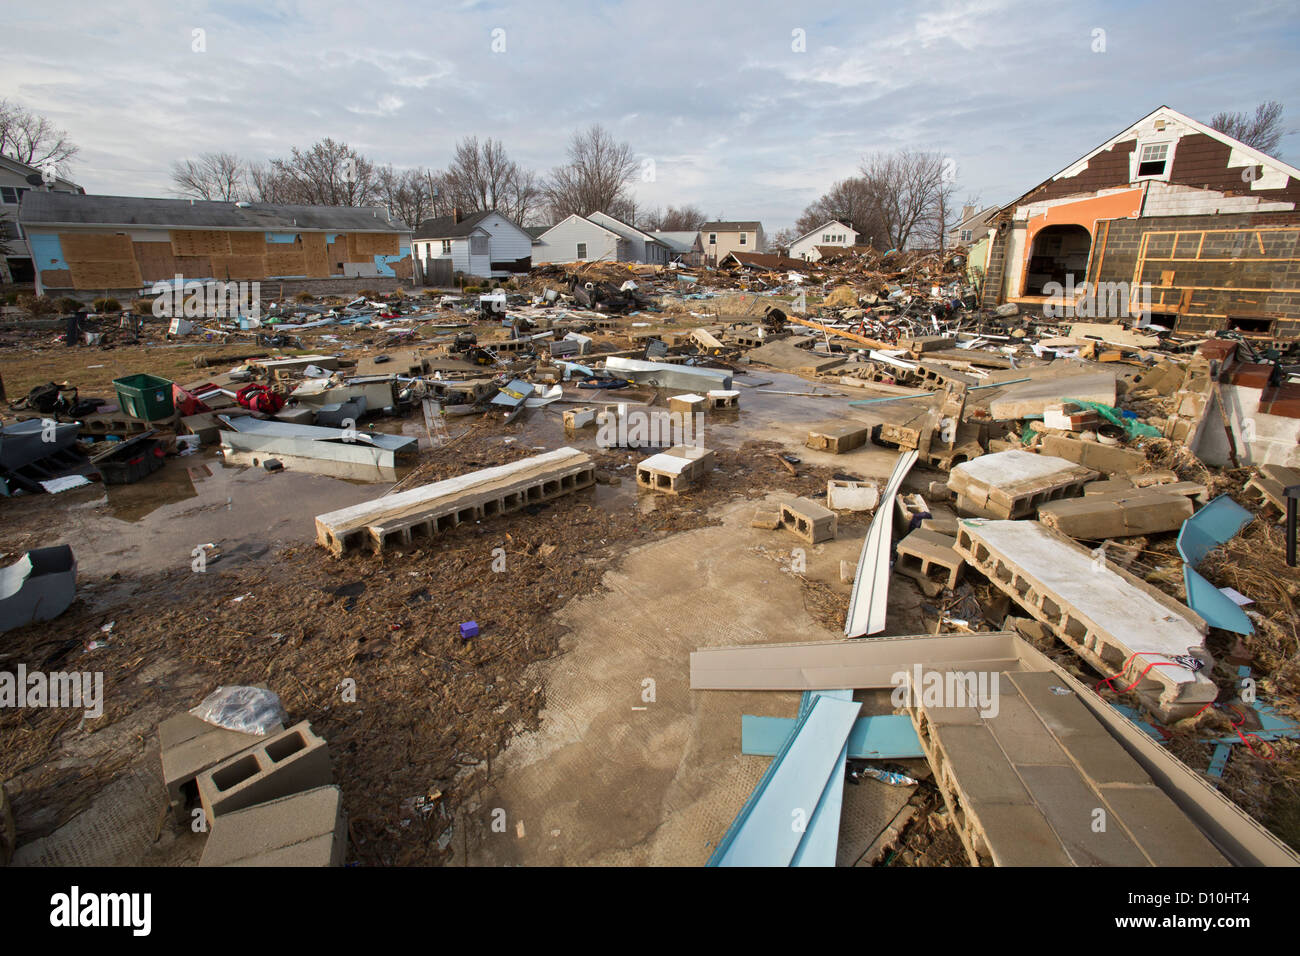 Union Beach, New Jersey - Debris from destruction of a seaside Stock